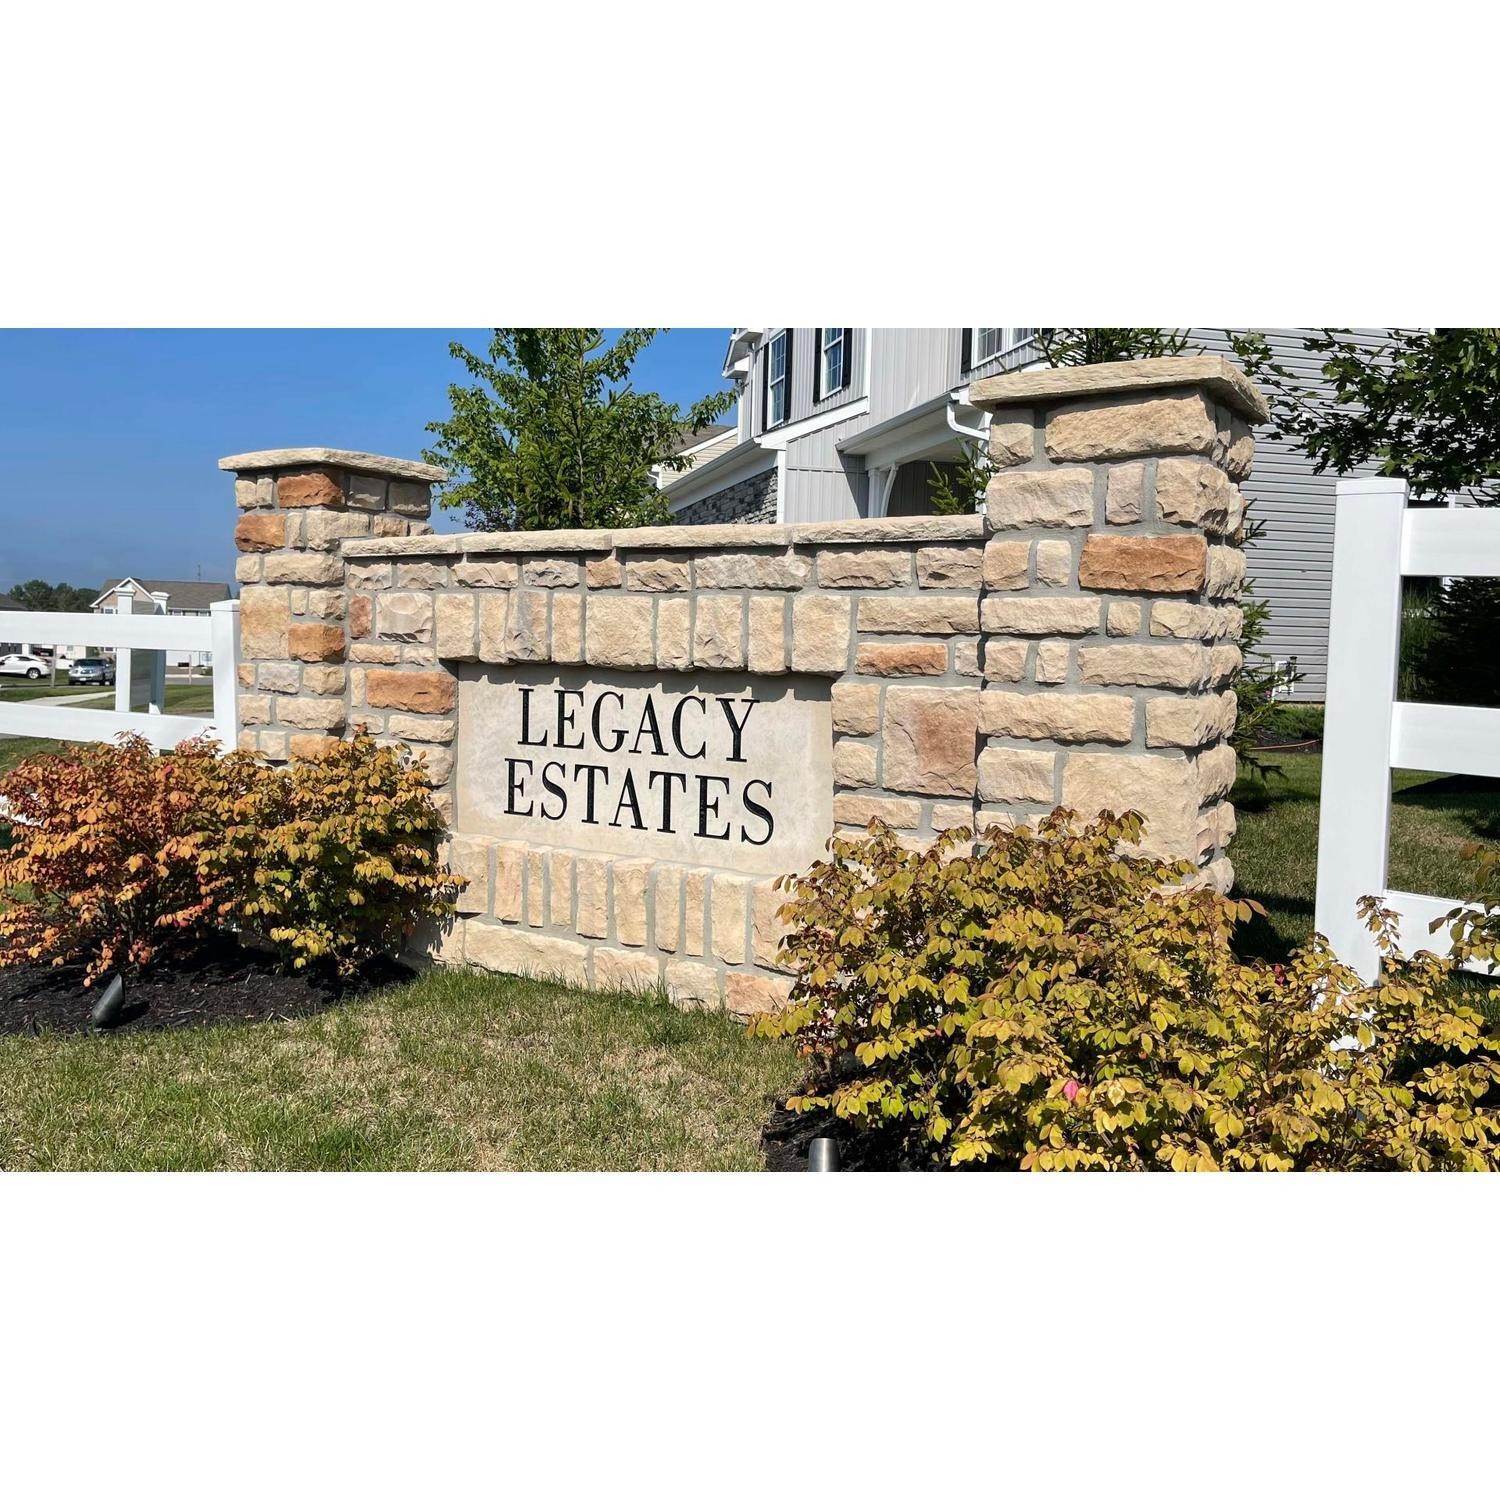 5. Legacy Estates building at 1202 Cunningham Avenue, Pataskala, OH 43062